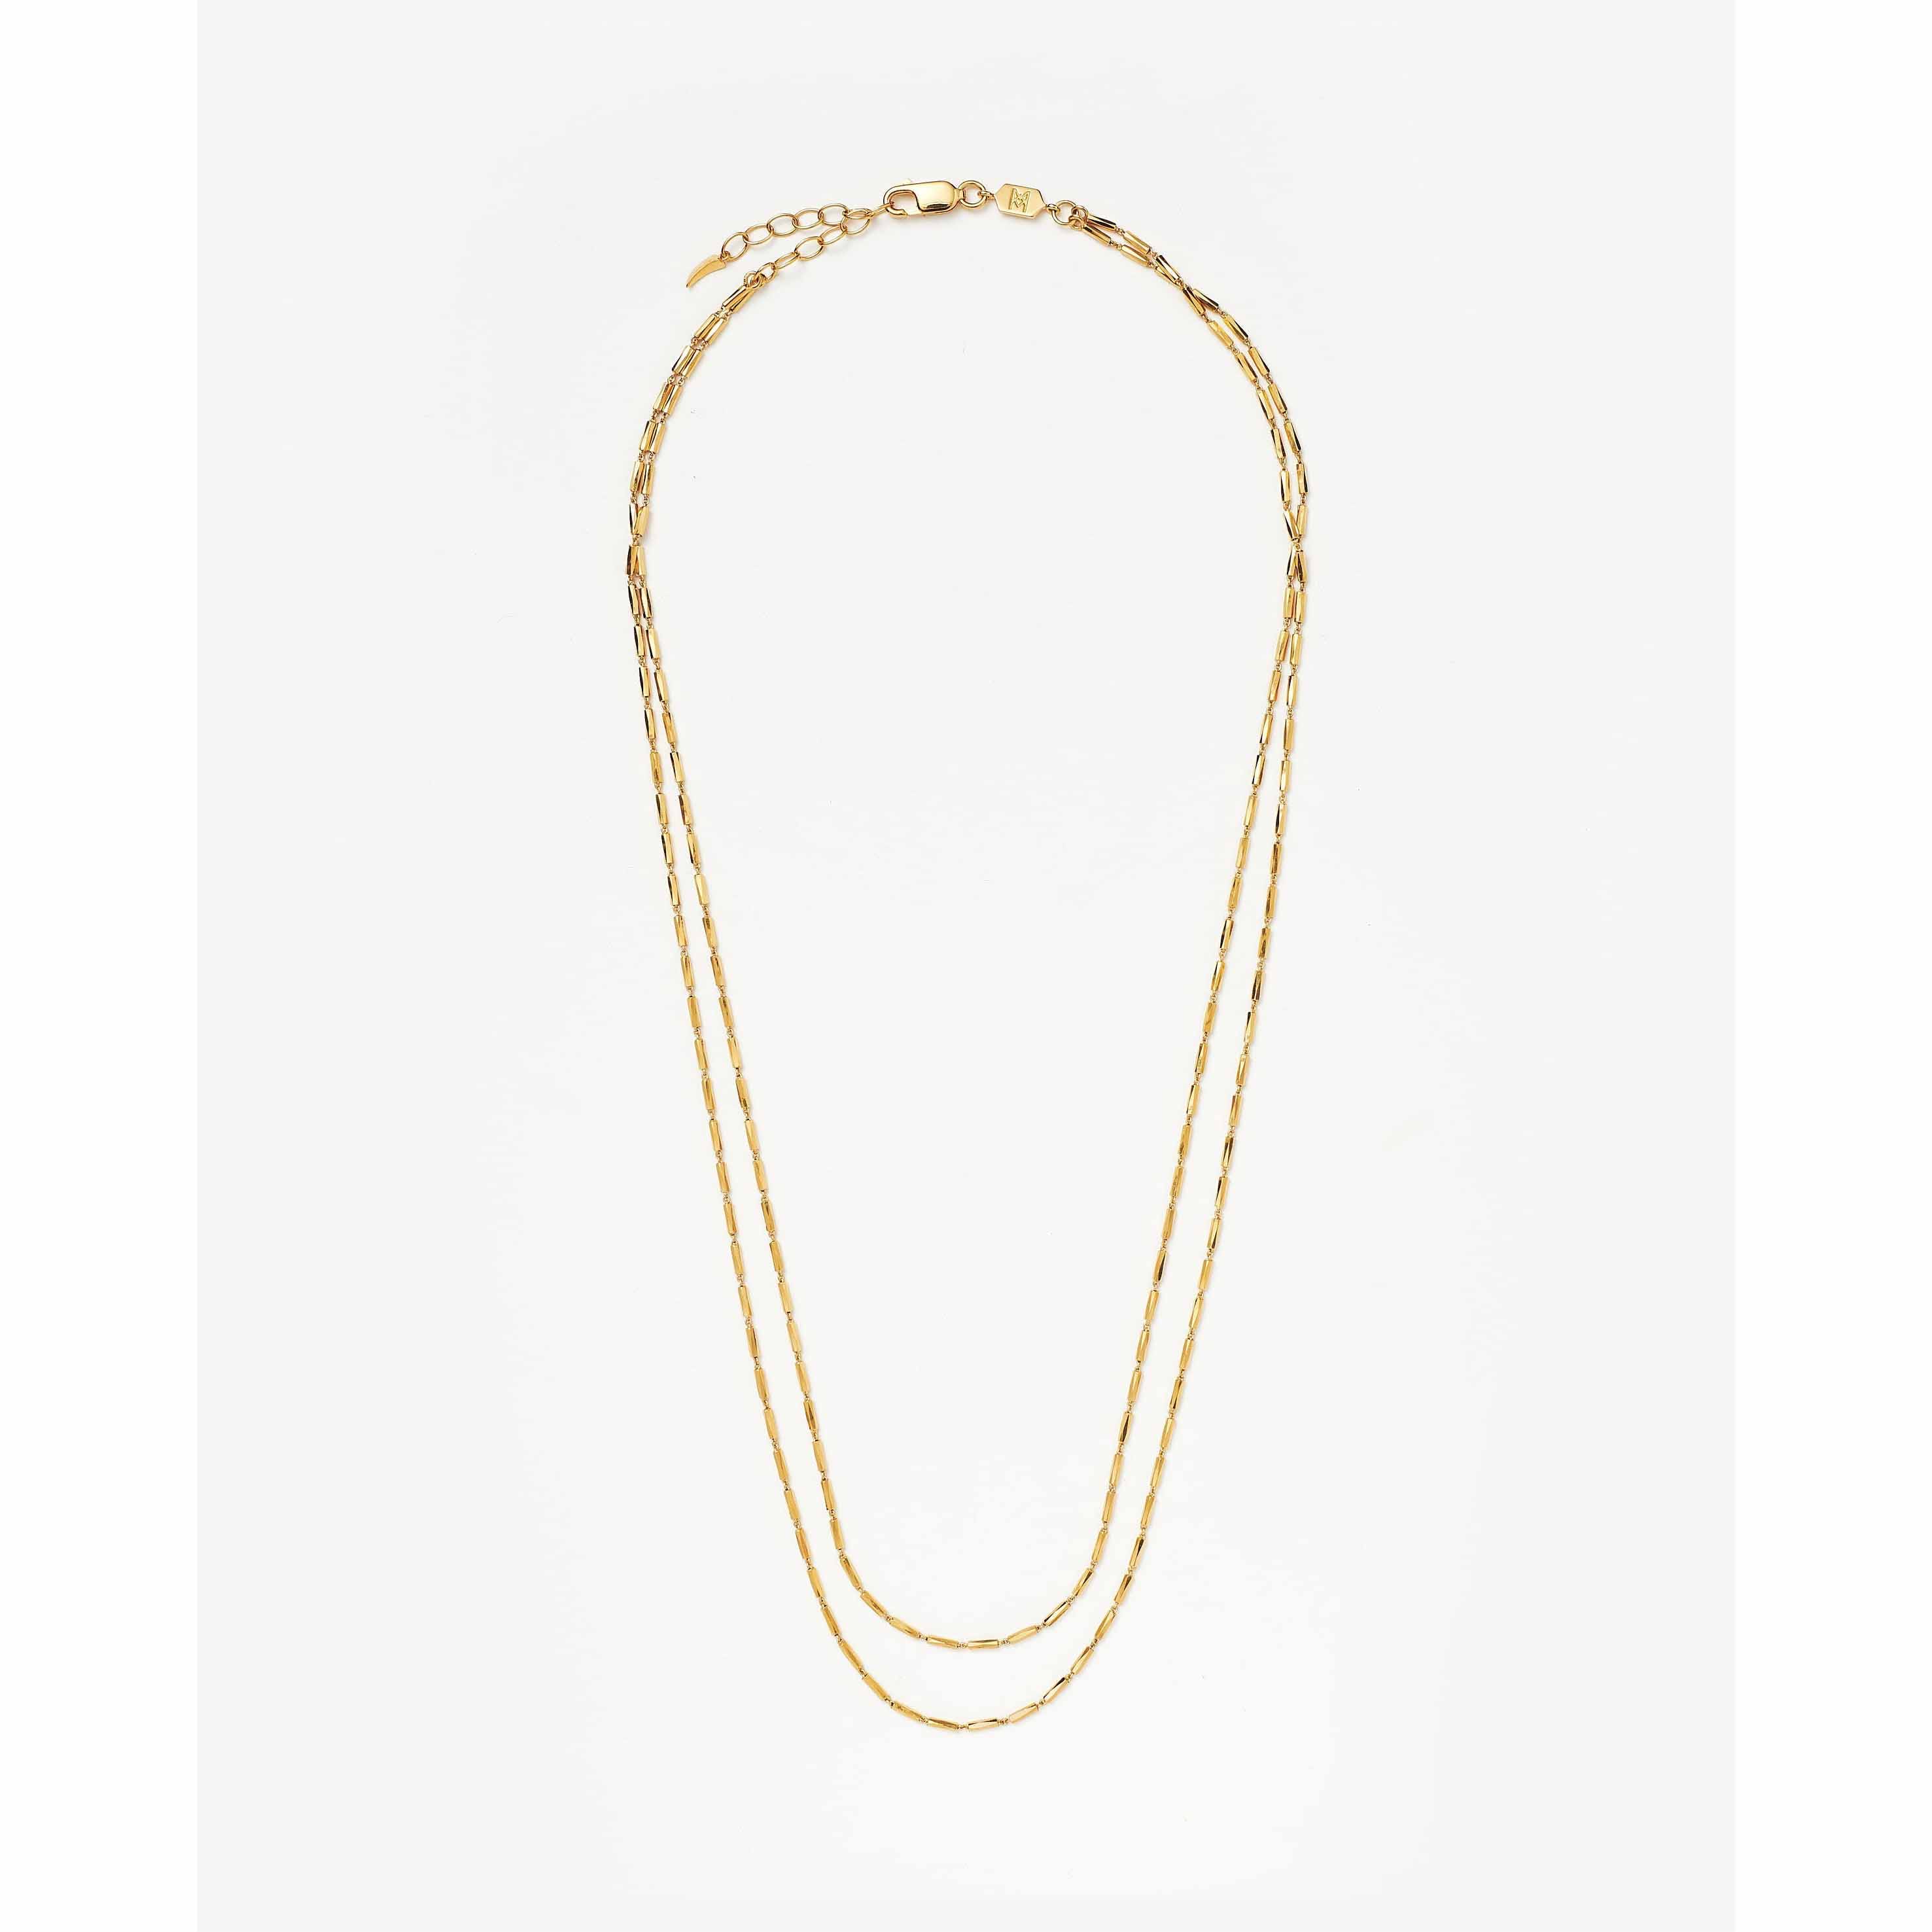 Custom wholesale vintage link double chain necklaces18k gold plated vermeil